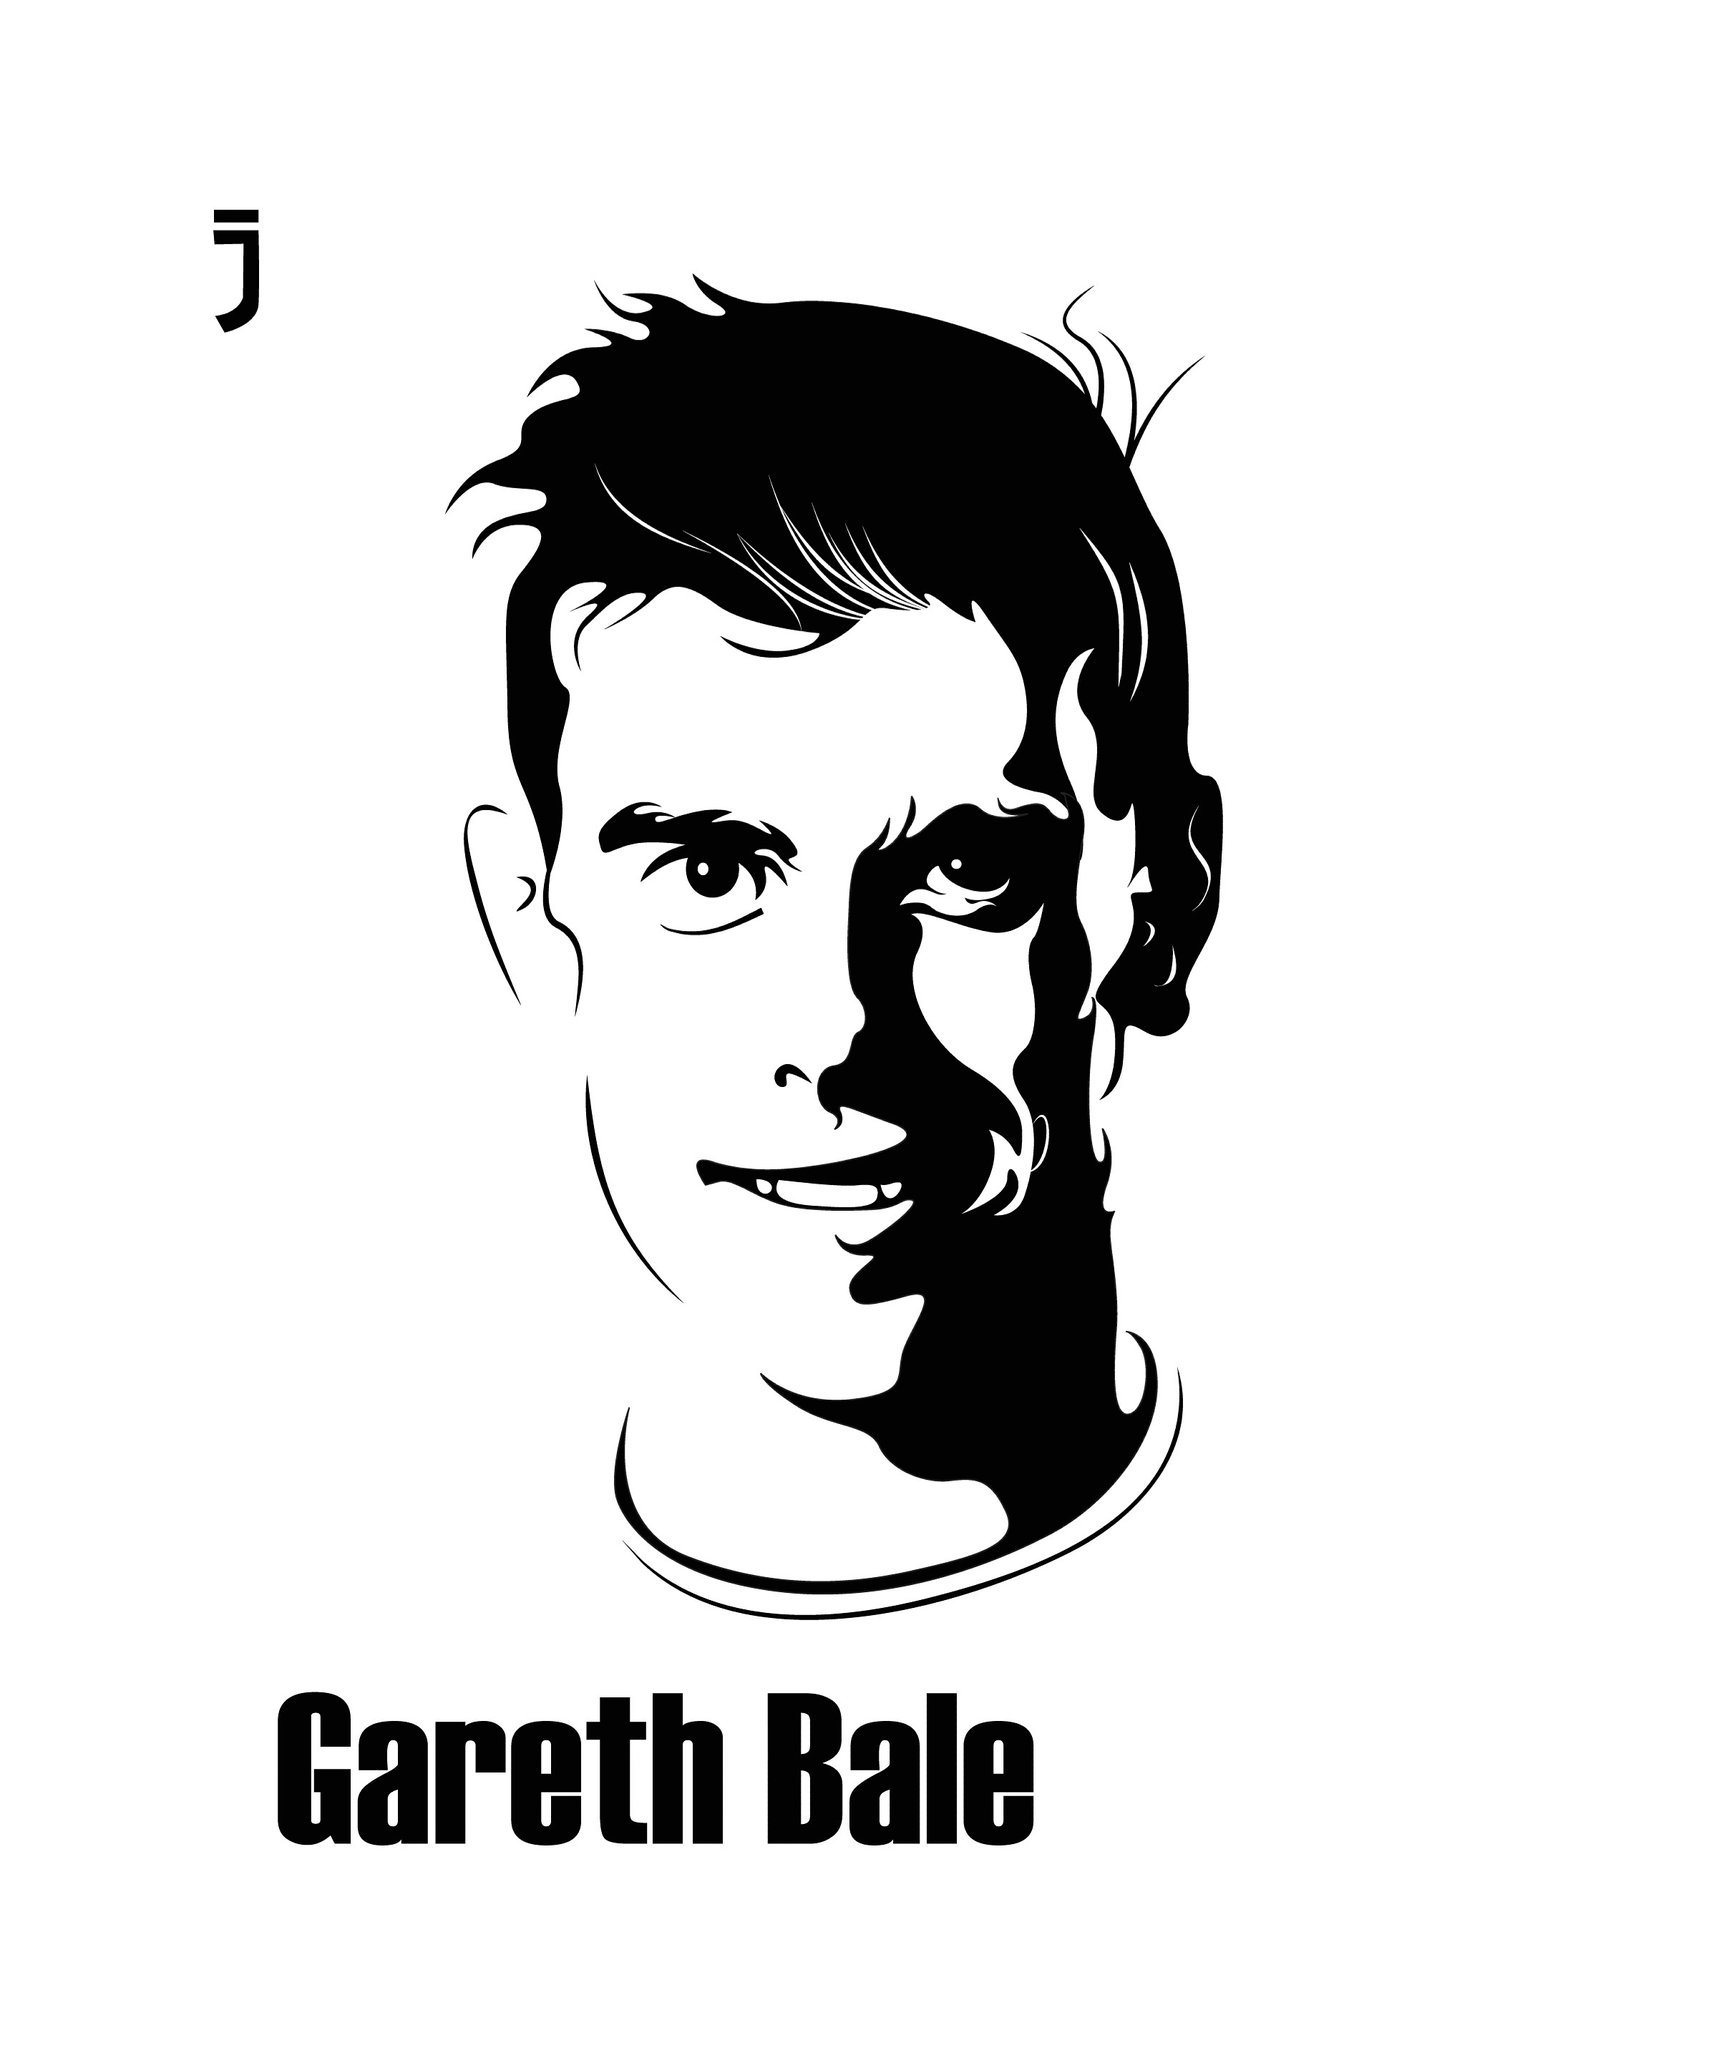 Happy Birthday Gareth Bale  .
.
.   